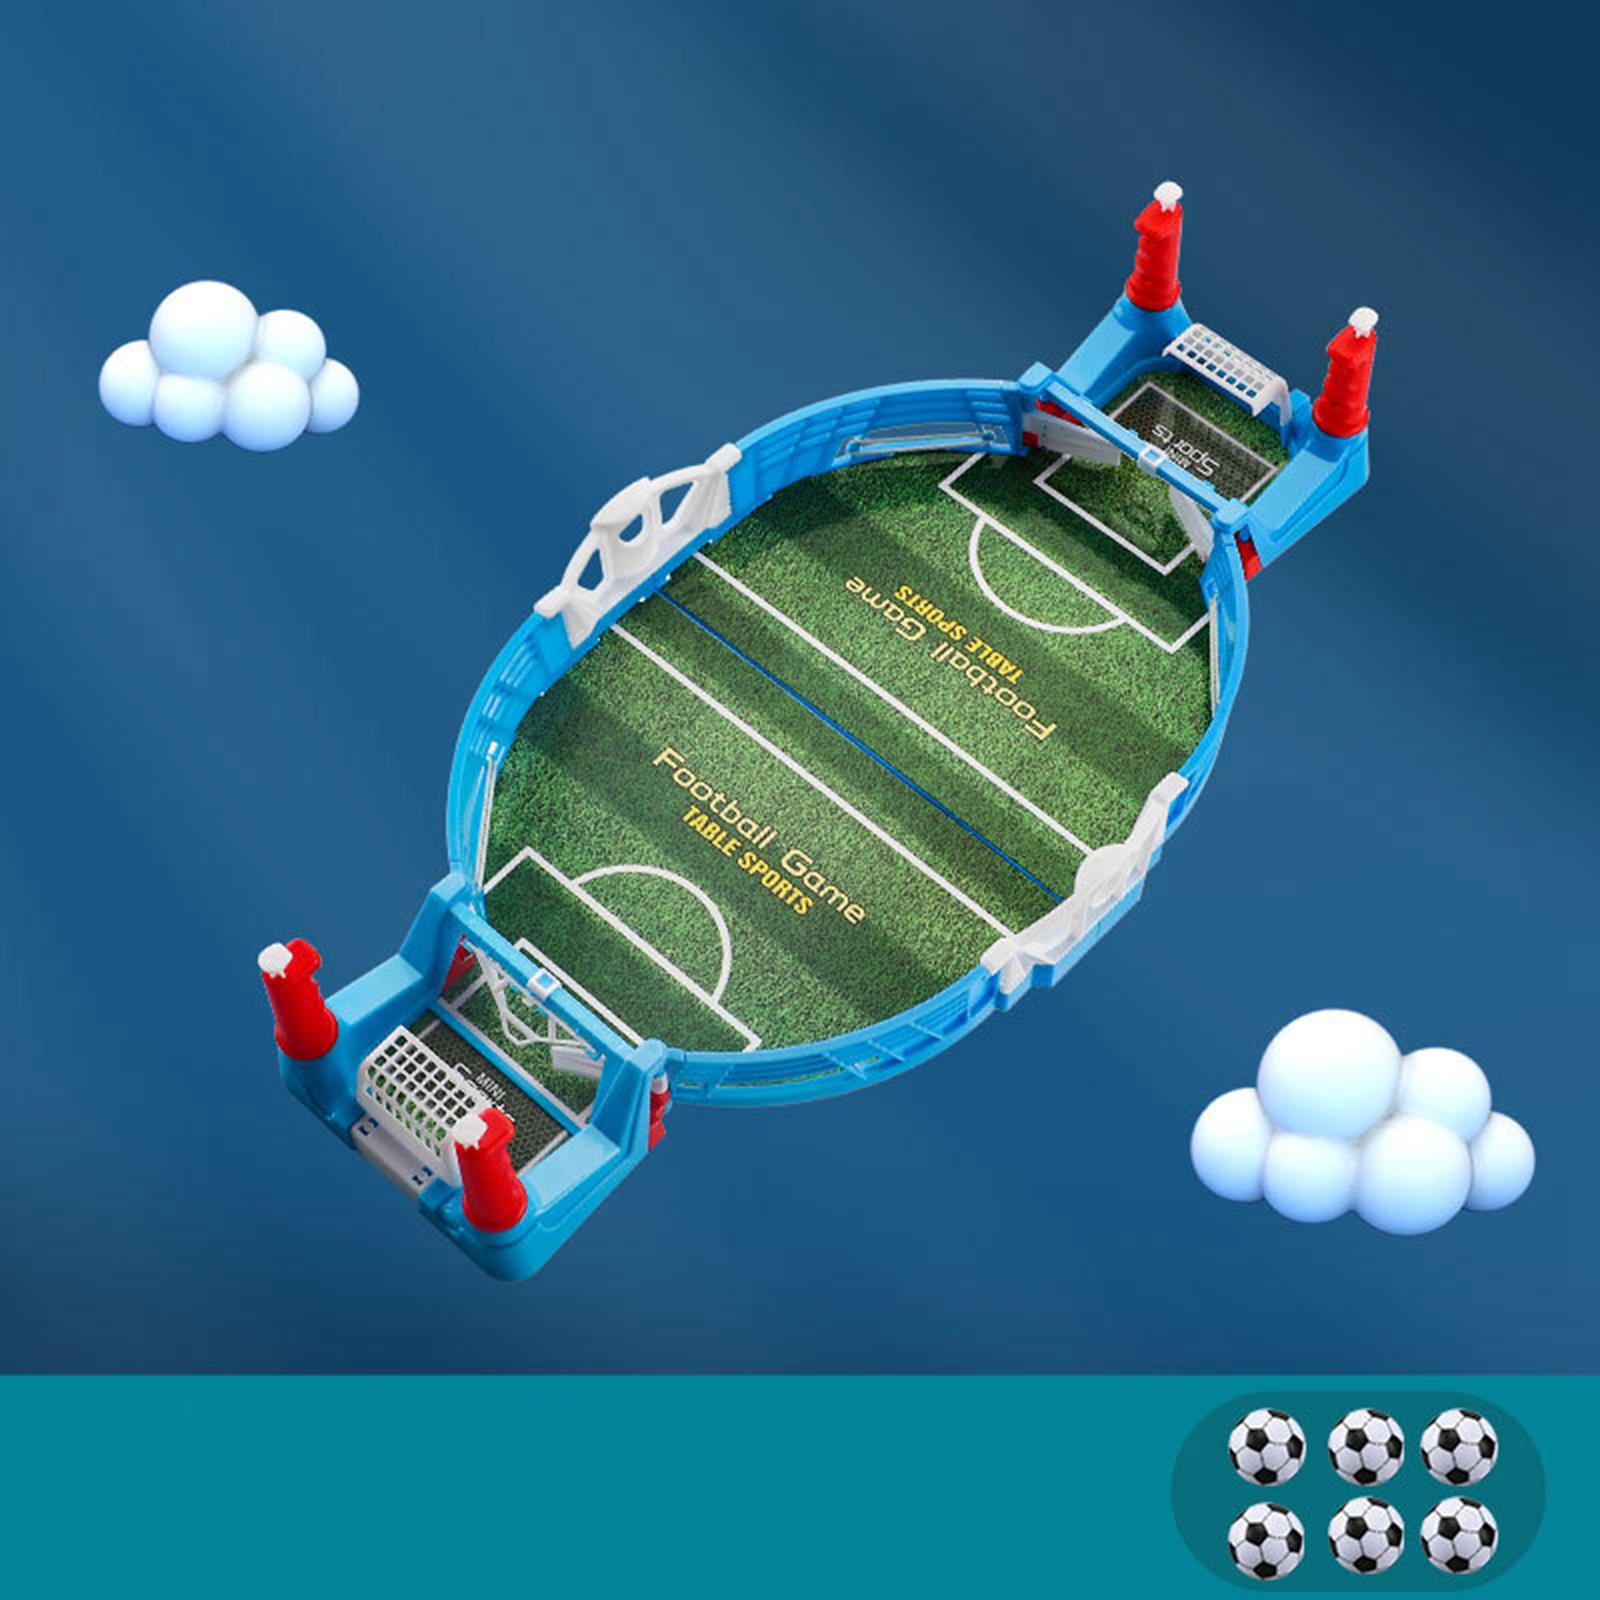 Desktop Football Board Games Kit Indoor Toy Sports for Adults Kids 57cmx27cm2 Balls